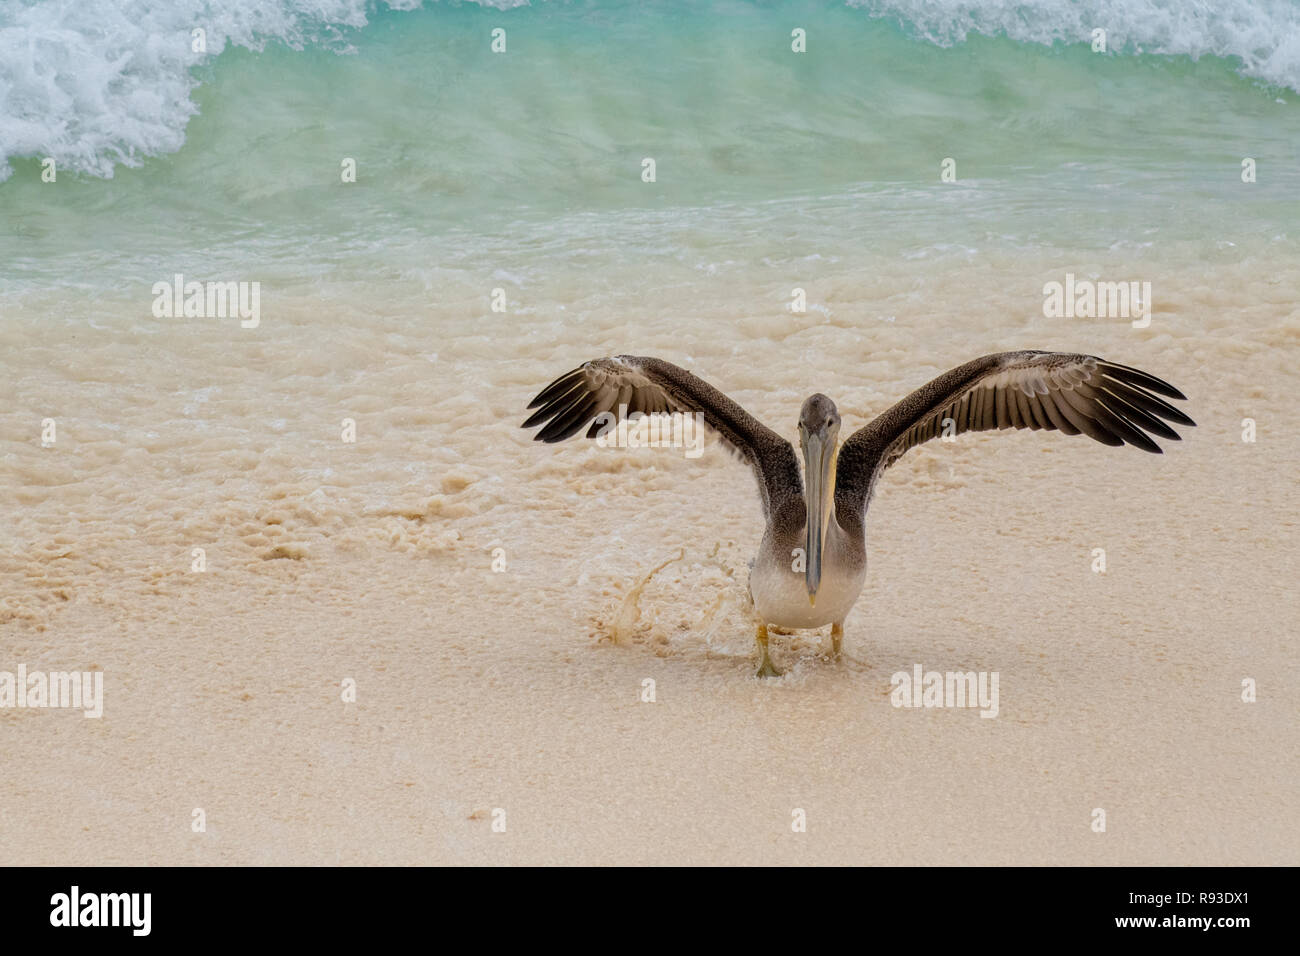 Pelikan - Brauner Pelikan, Pelecanus occidentalis / Pelecanidae spritzt Wasser Vogel w/große Schnabel in Aruba / Karibik Insel - Coastal Sea Bird Stockfoto